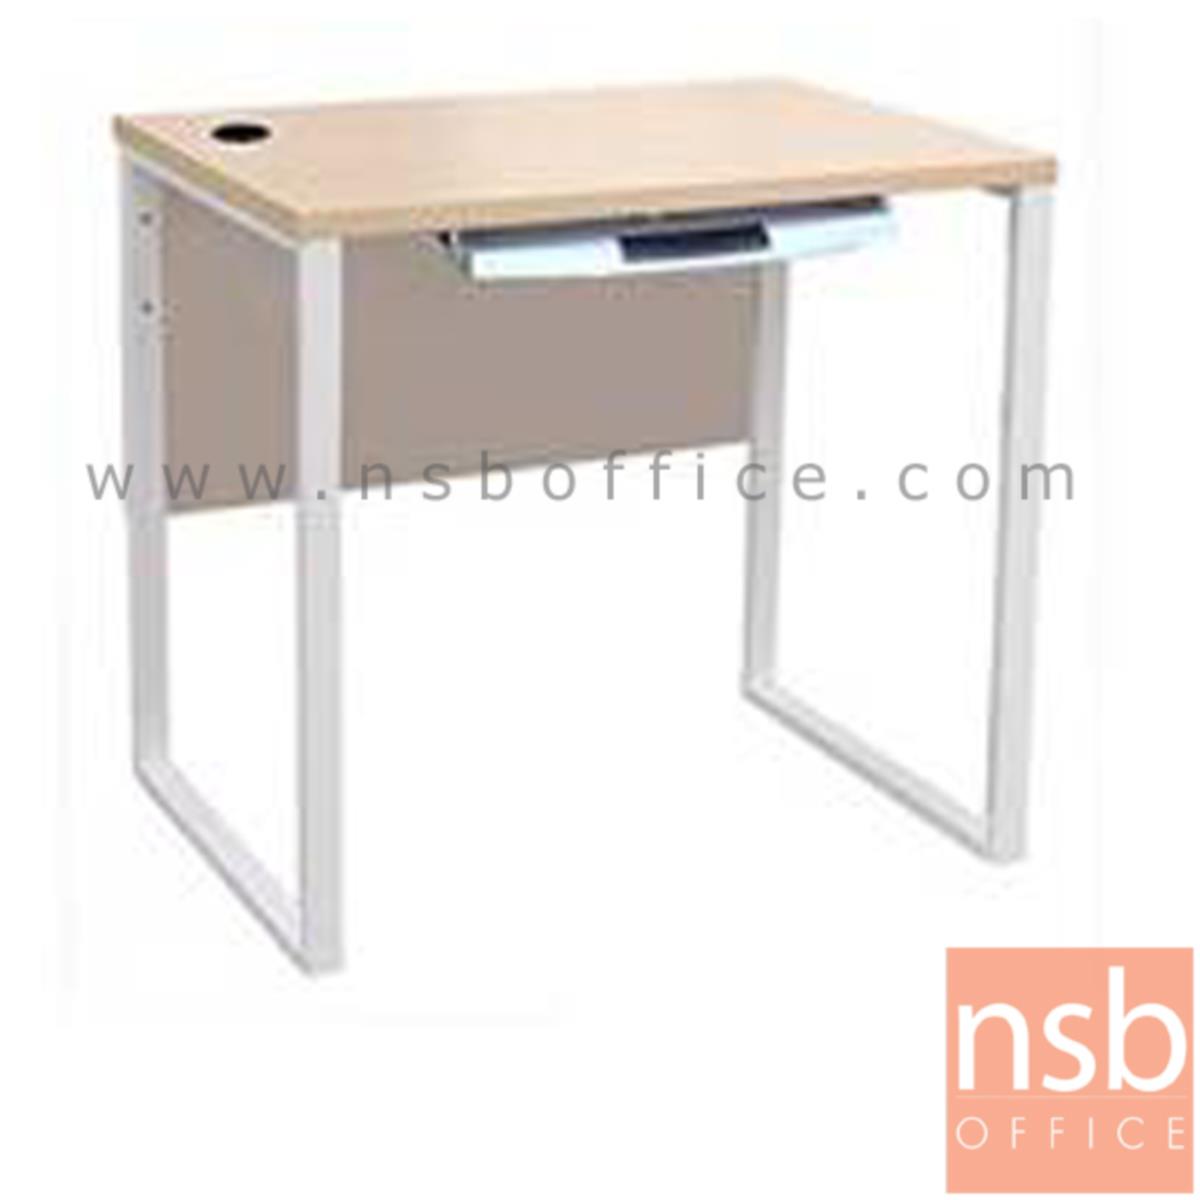 A01A023:โต๊ะคอมพิวเตอร์  รุ่น Marin (มาริน) ขนาด 80W cm. ขาเหล็ก